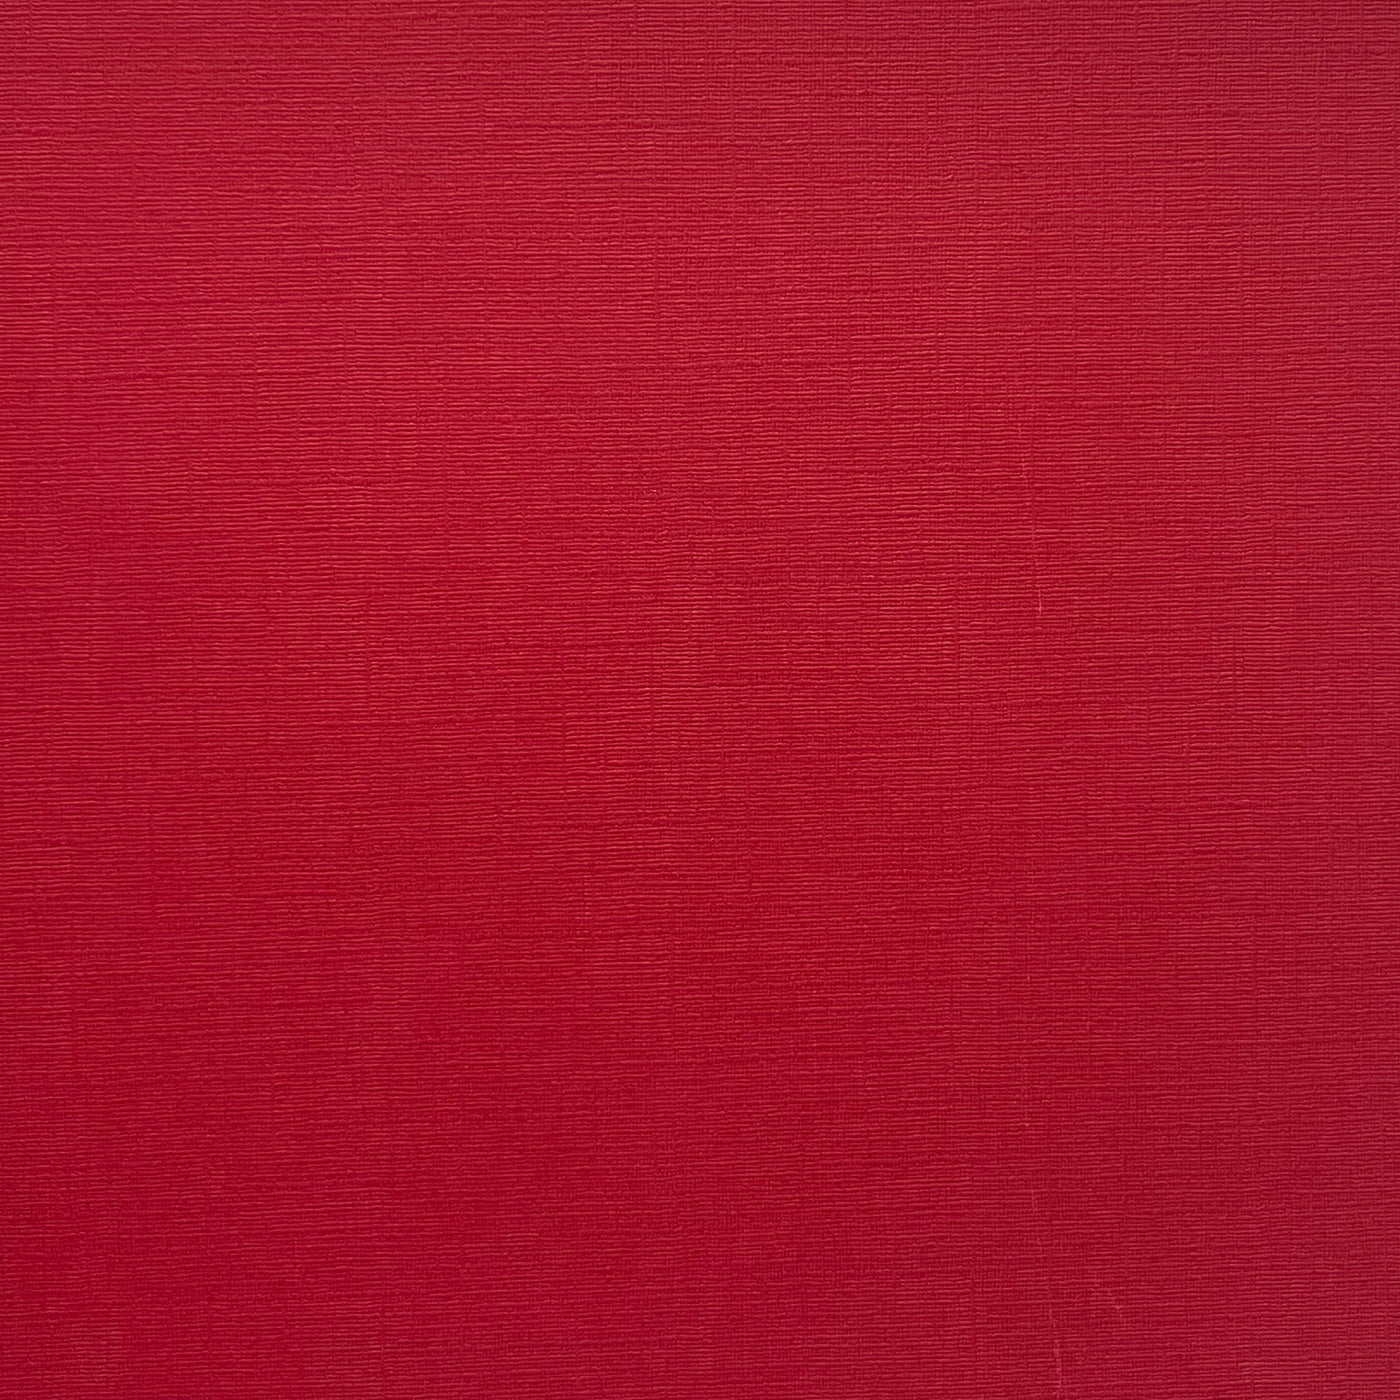 Dare Devil - Textured 12x12 Cardstock - Intense red canvas scrapbook paper